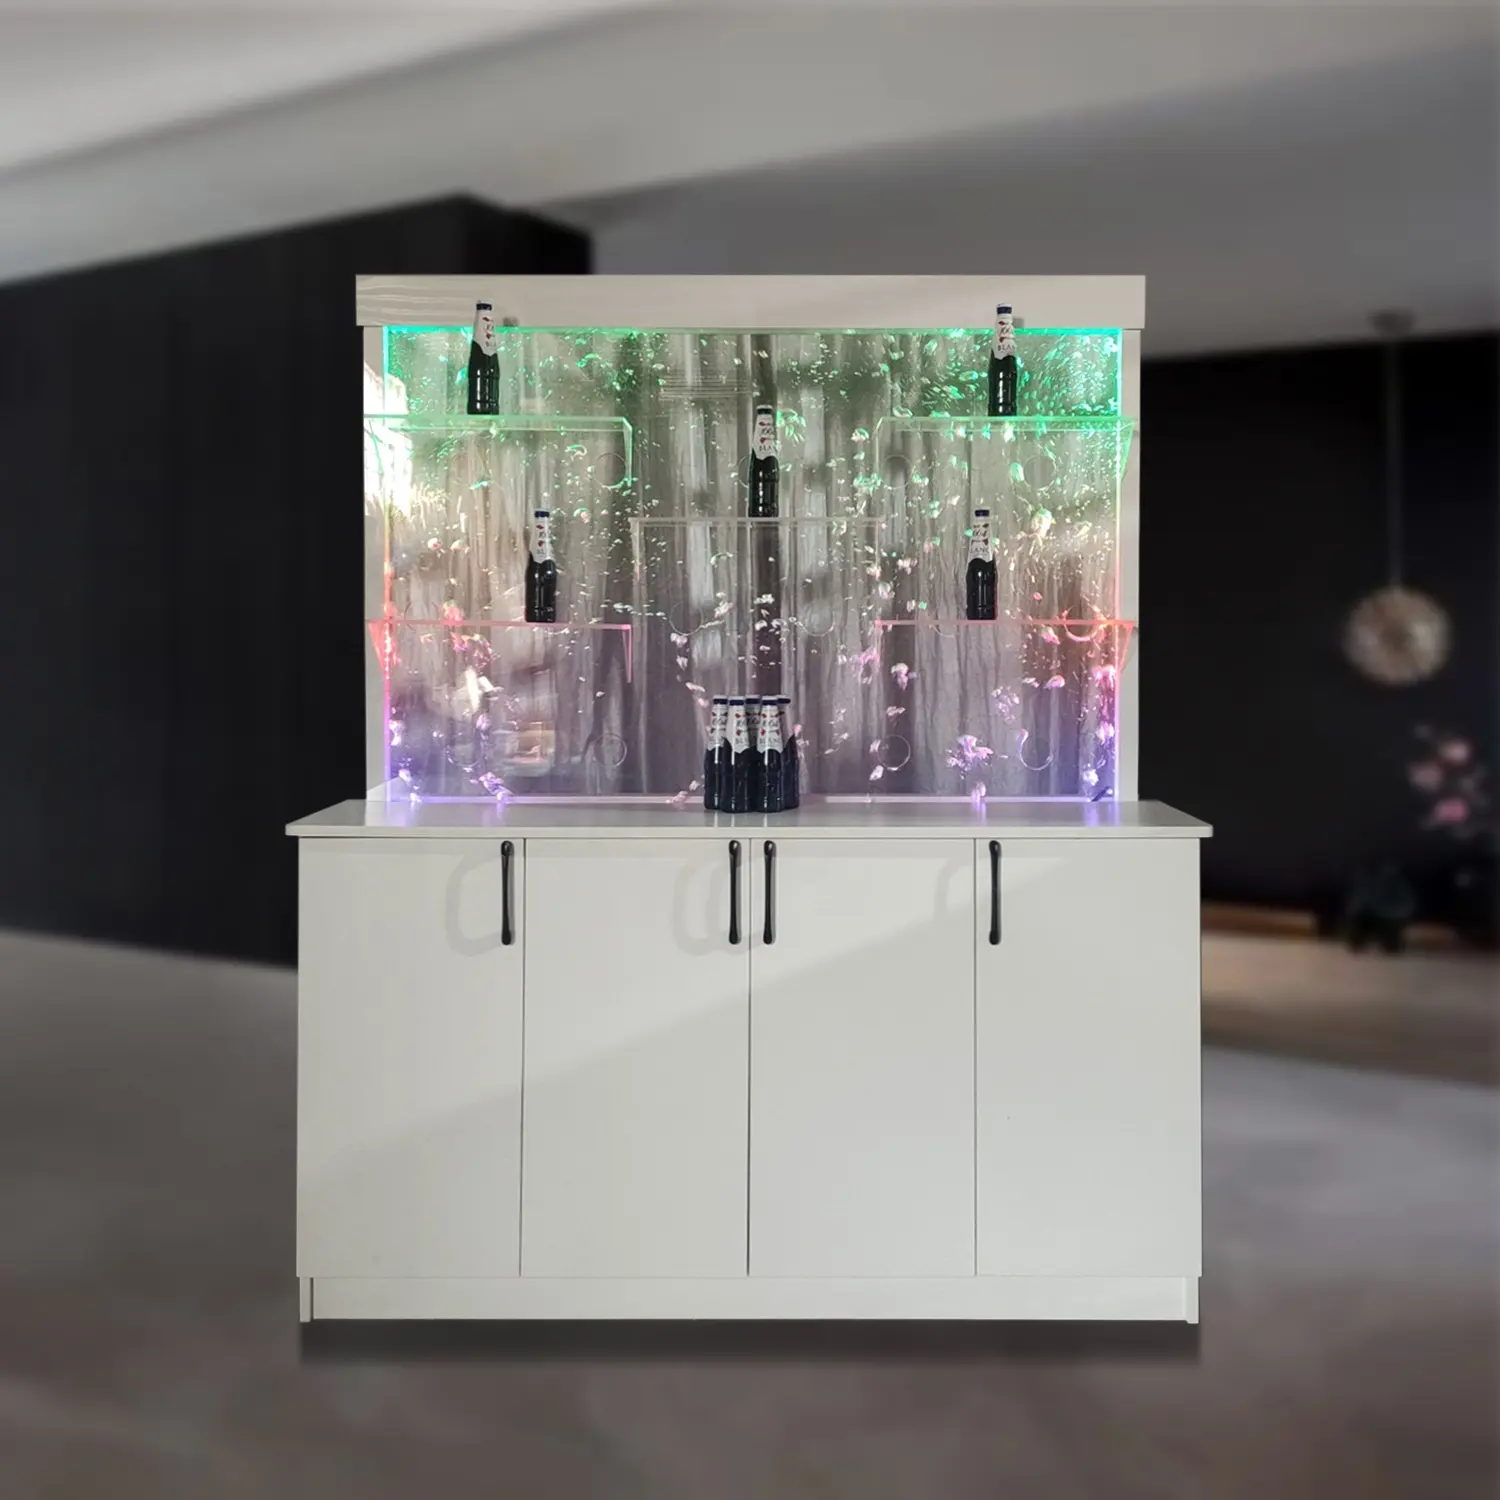 Pantalla de pared de panel de burbujas de agua de iluminación LED hecha a medida con gabinete de zapatos para divisor de habitación y decoración